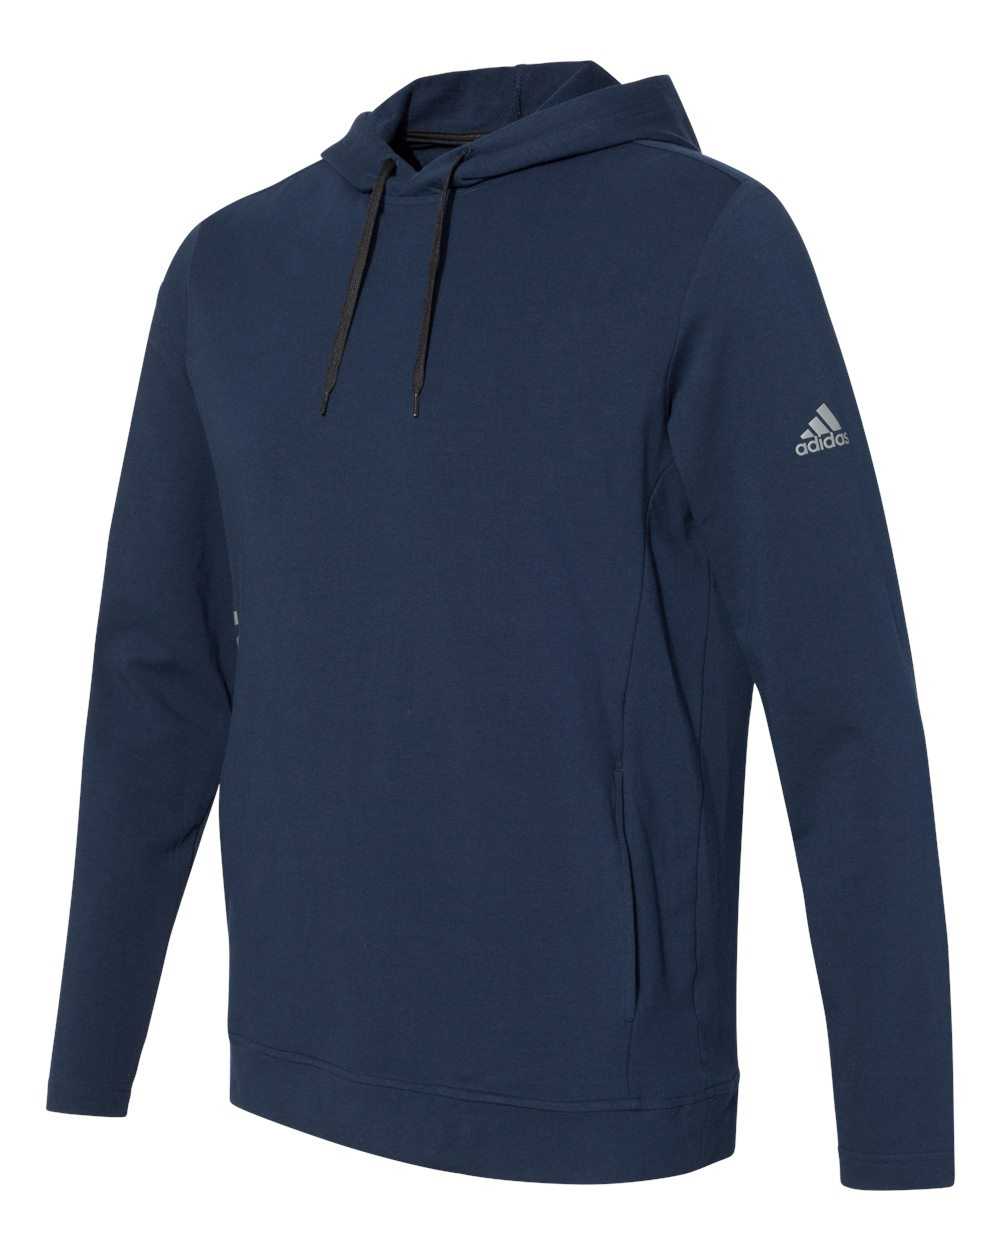 Adidas A450 Lightweight Hooded Sweatshirt - Collegiate Navy - HIT a Double